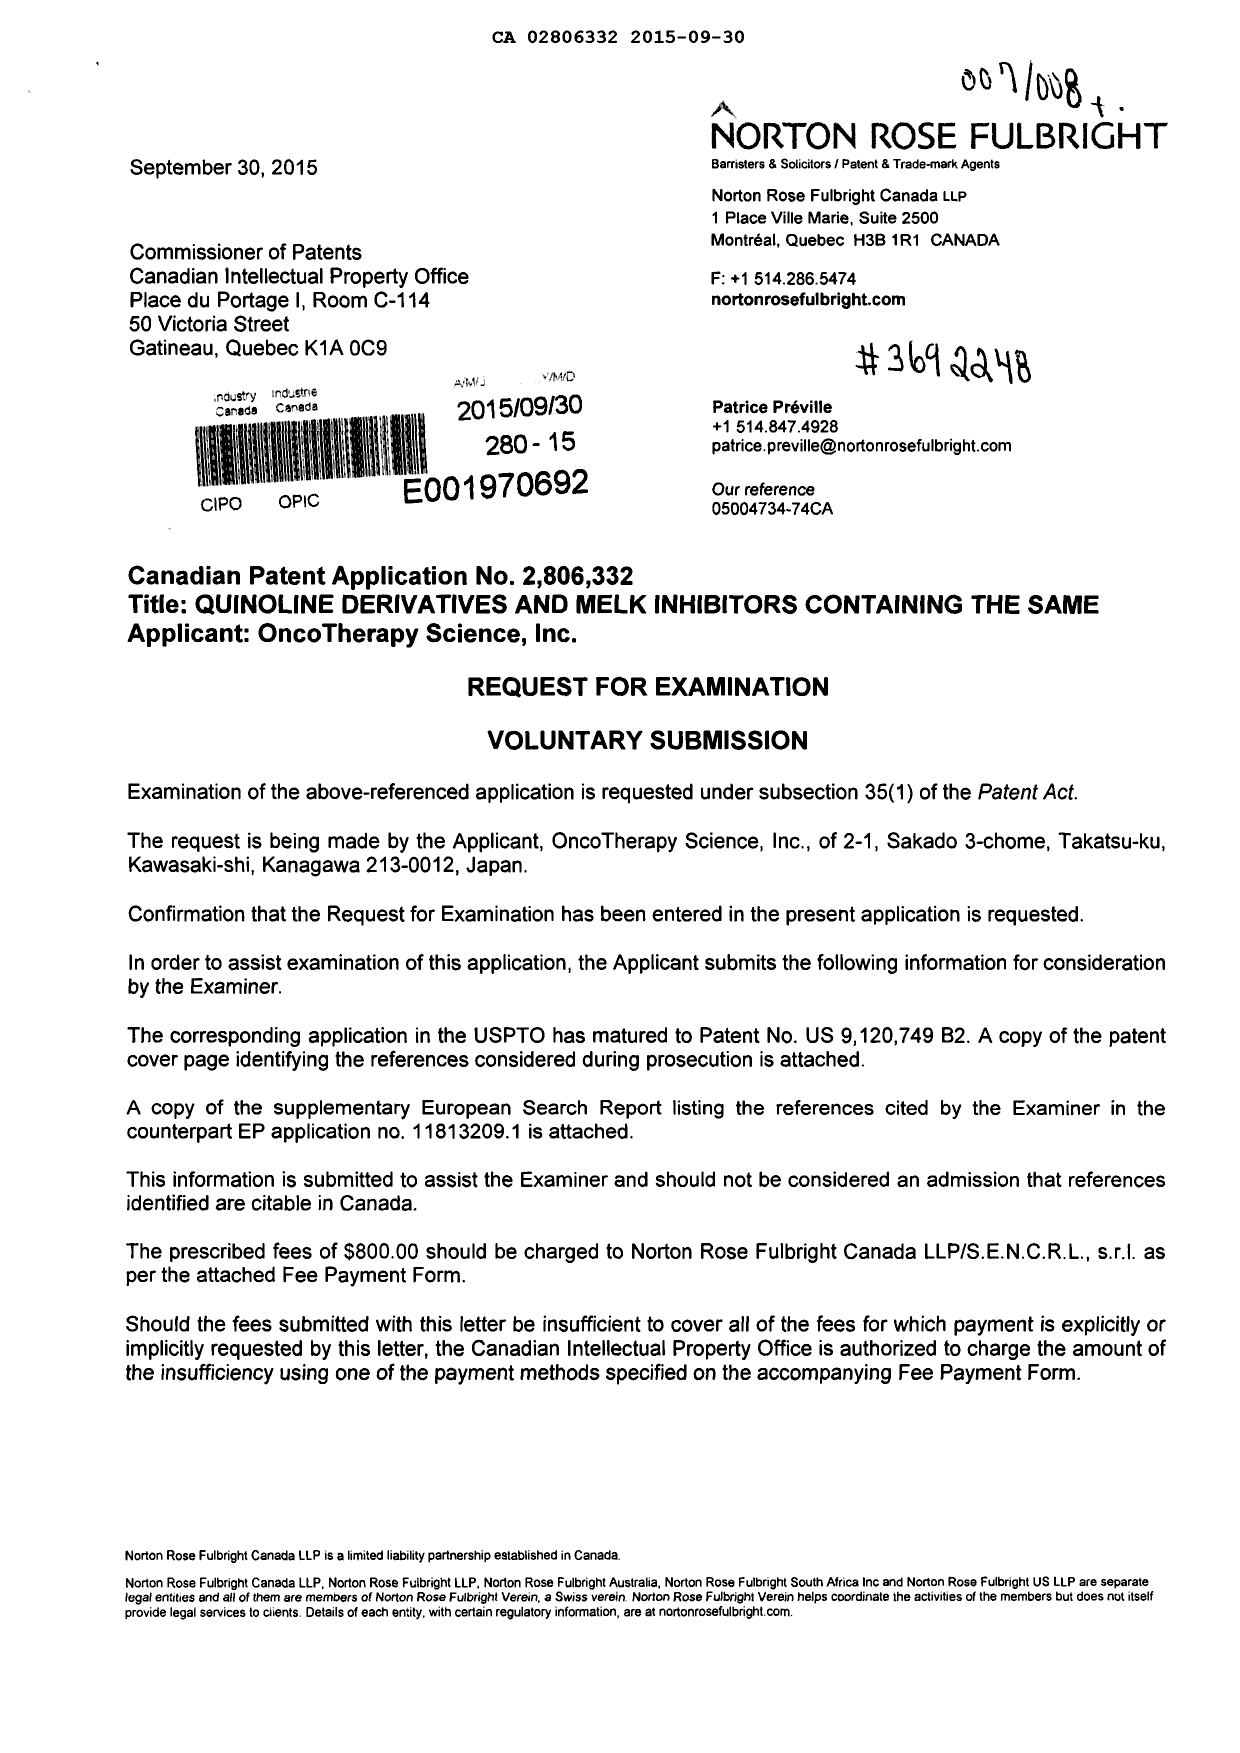 Canadian Patent Document 2806332. Prosecution-Amendment 20141230. Image 1 of 2